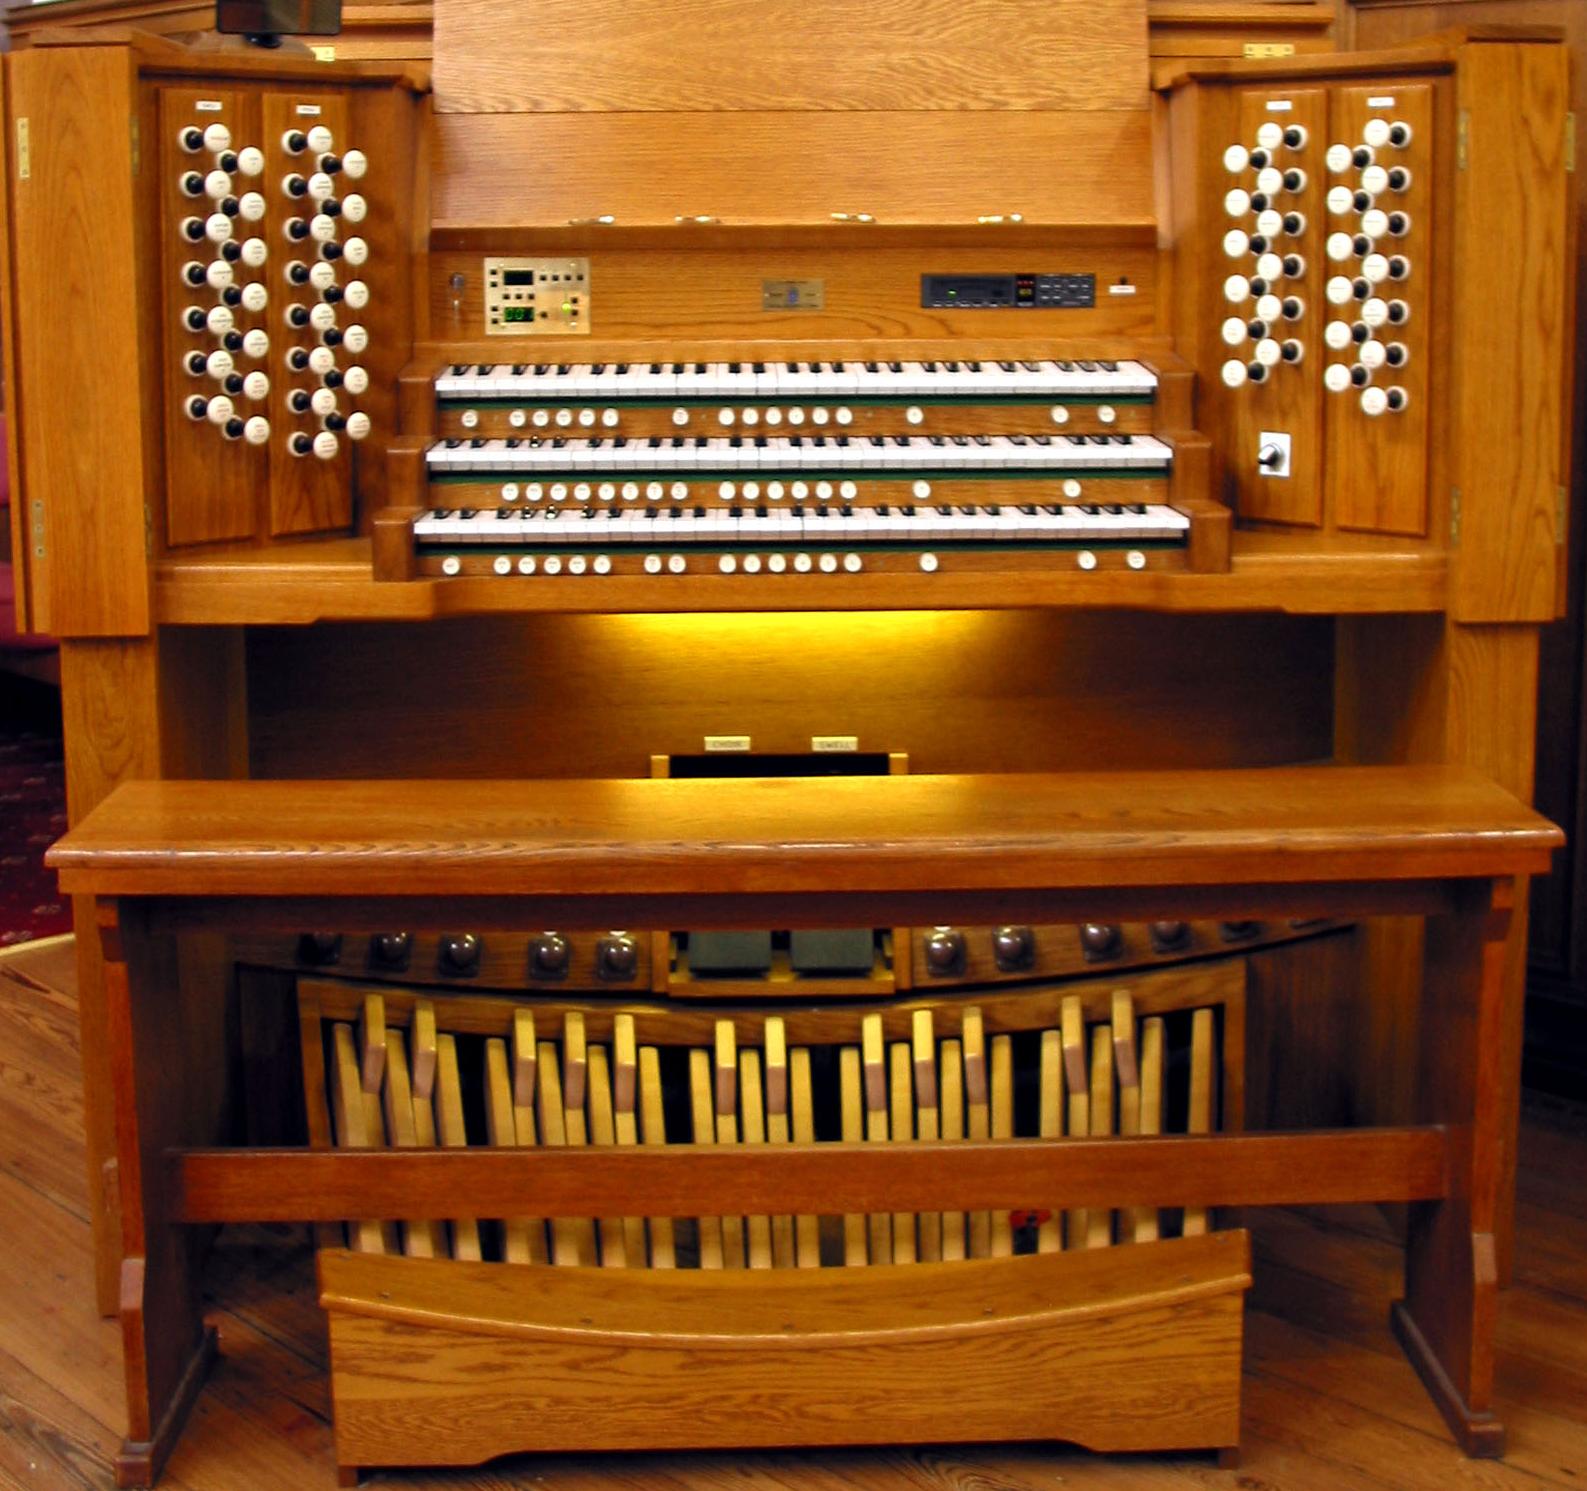 The Organ Console